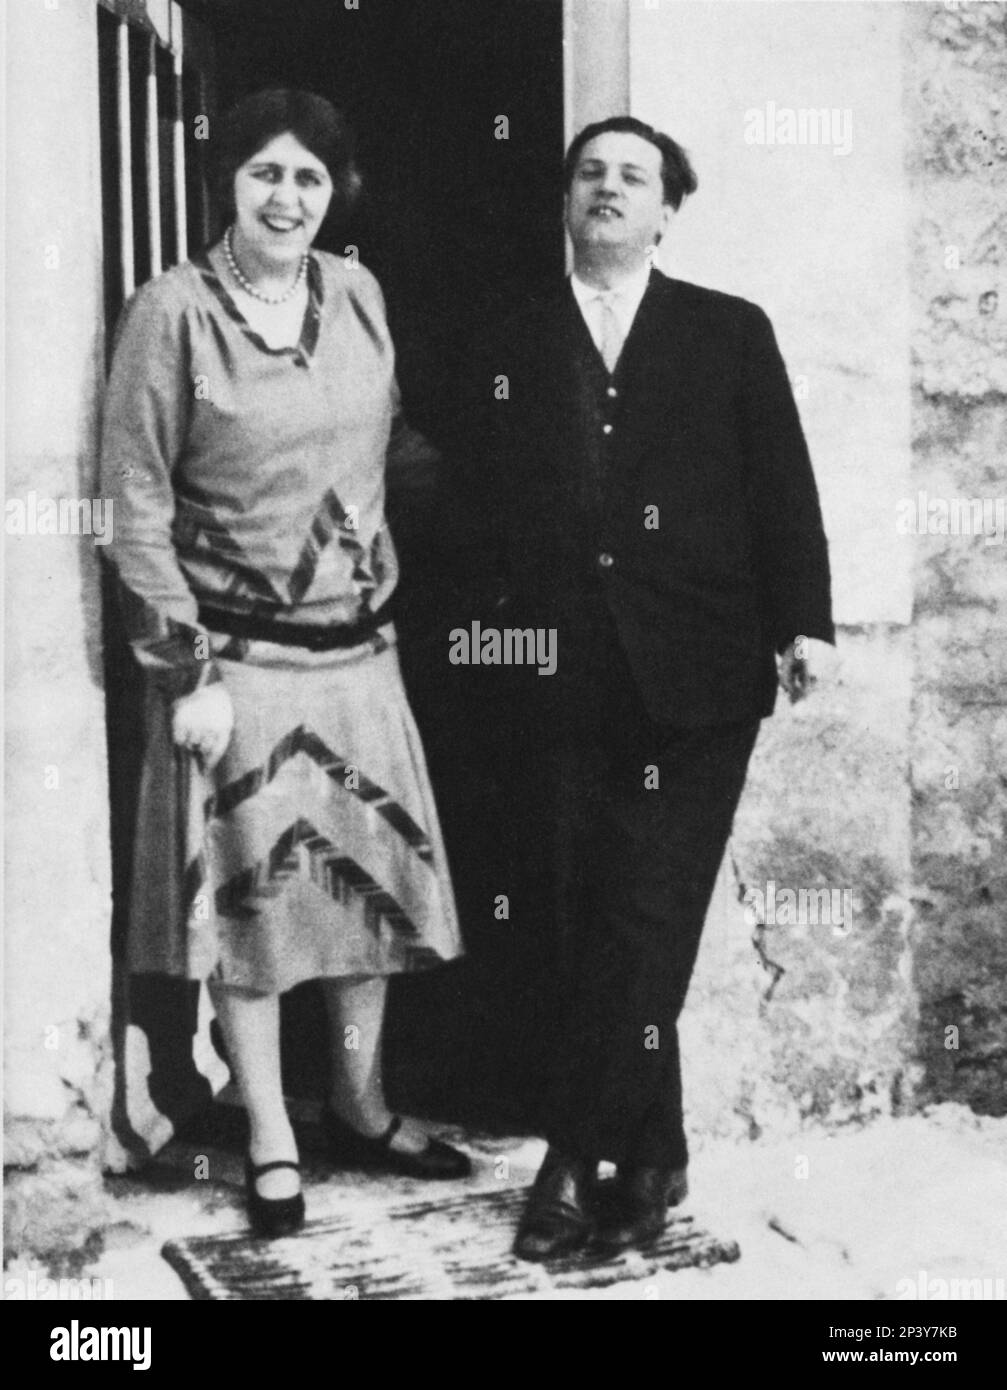 The americans poet EUGENE JOLAS ( 1894 - 1952 ) wrieter , traslator and literary critic , with the wife MARIA McDONALD ( 1893 - 1987 ) woman poet . Together found the parisian literary magazine TRANSATION in 1927 - POETA maledetto - POESIA - MARY - POETRY - Editore - pubblisher house - SCRITTORE - LETTERATURA - LITERATURE - letterato - maudit - critico letterario - marito e moglie - coniugi - AVANGUARDIA - AVANGARDE  ----  Archivio GBB Stock Photo